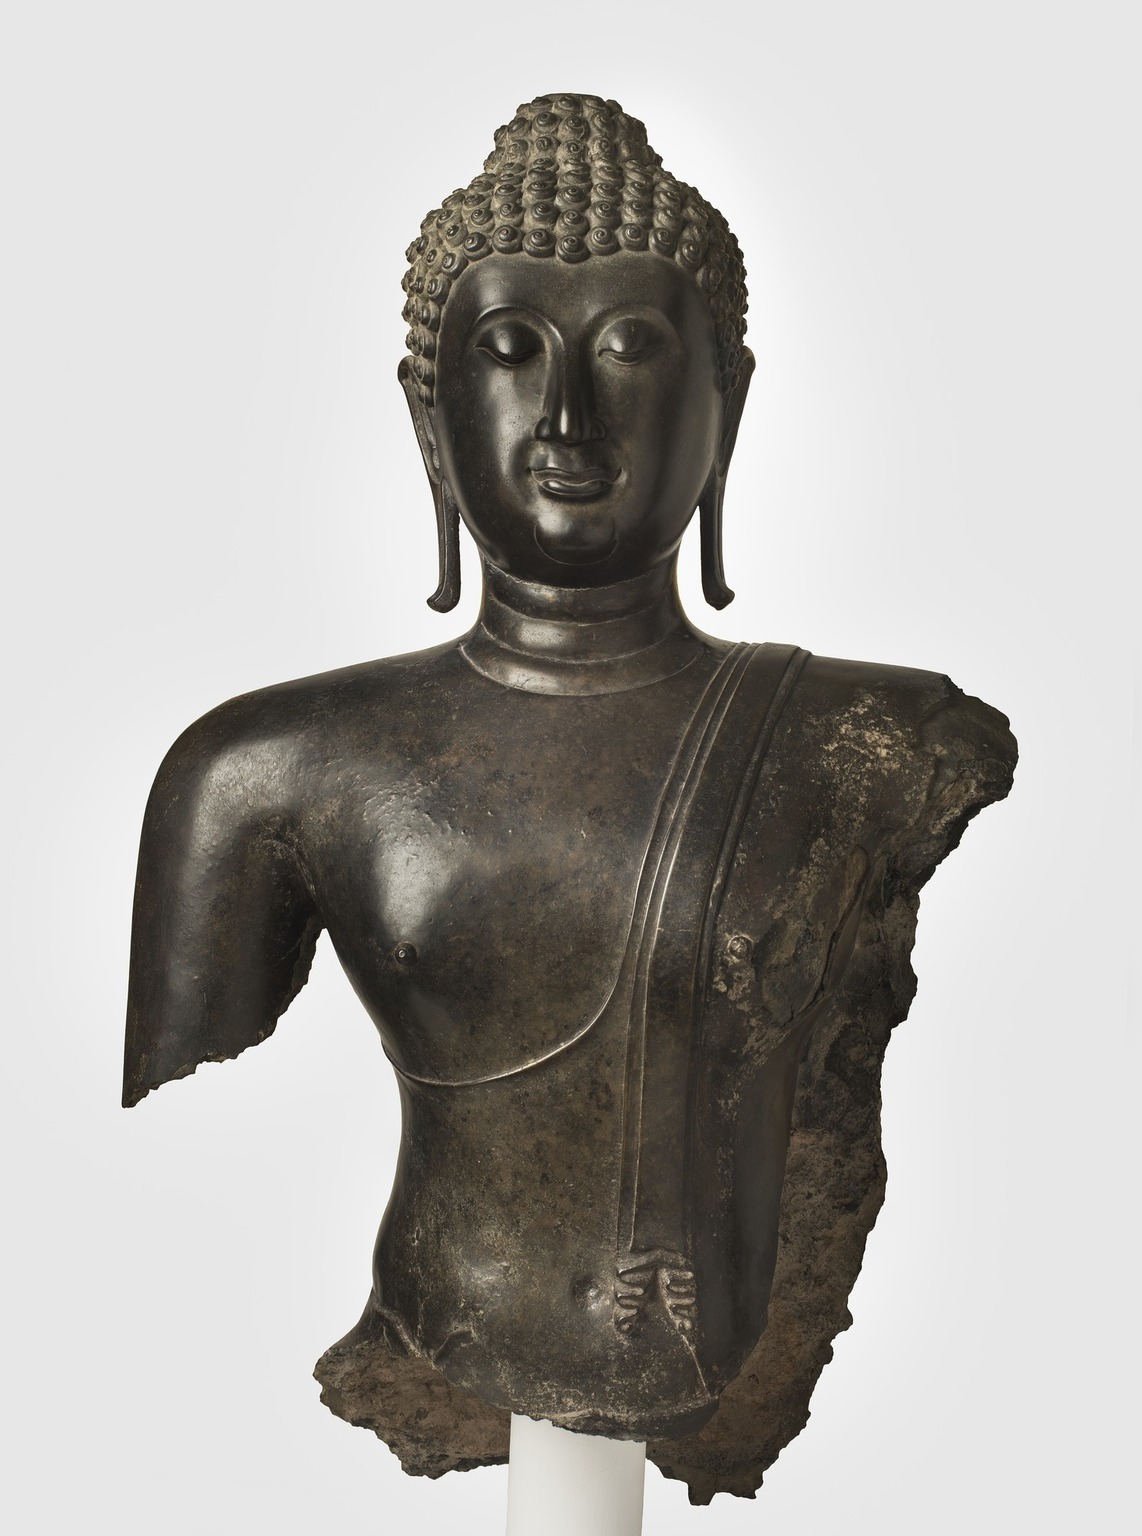 Buddha Board  National Gallery of Art Shop